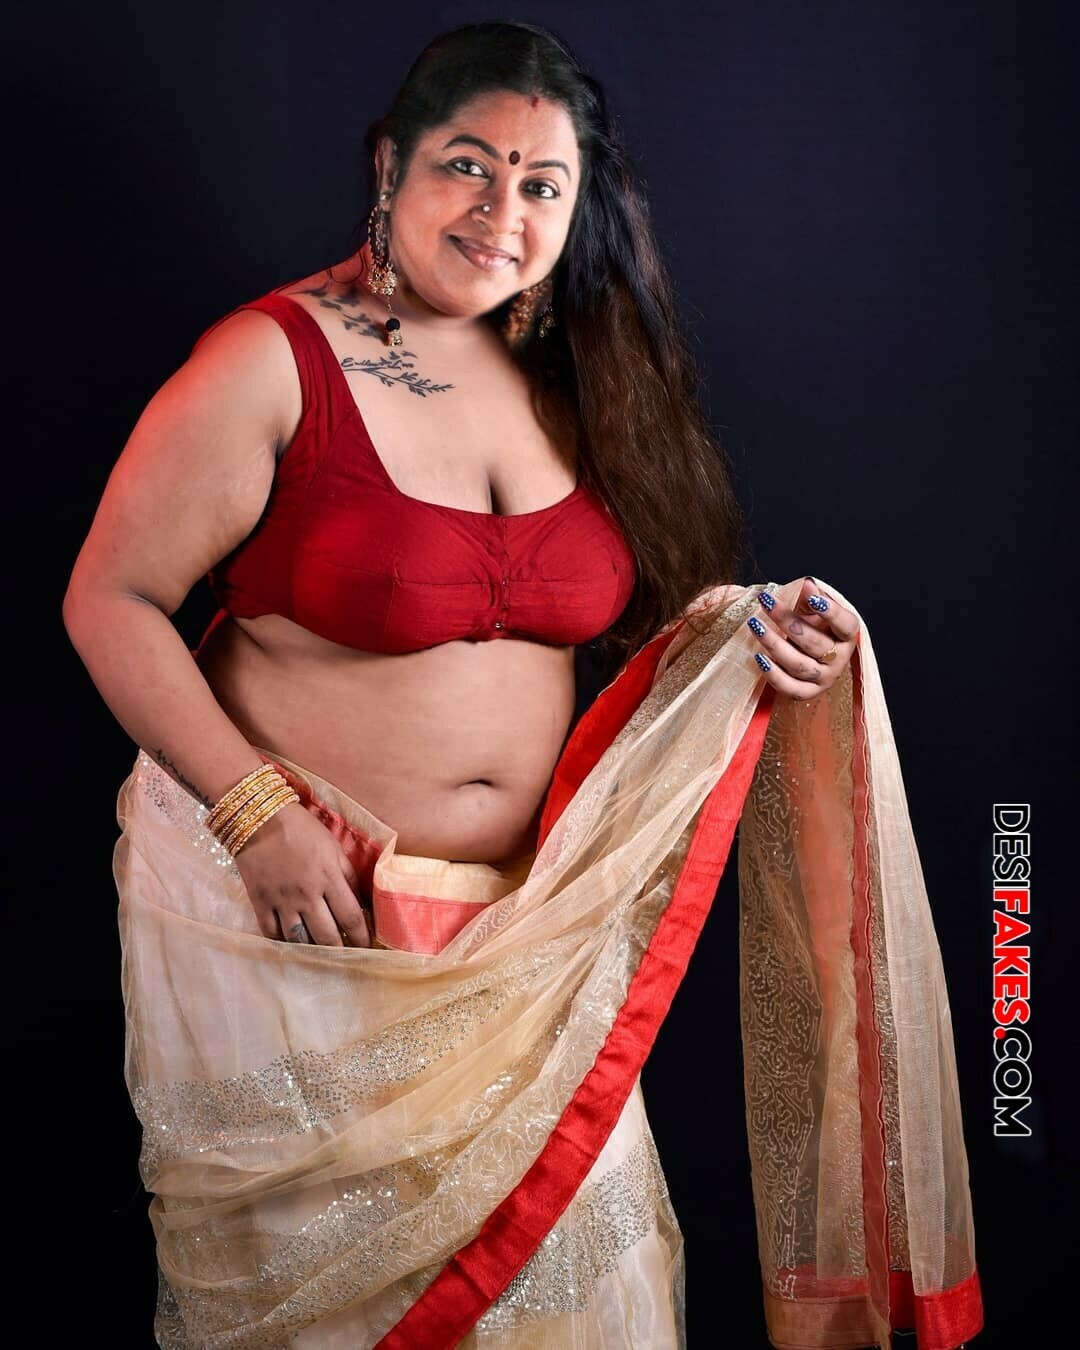 Radhika Telugu Heroine Sex - Telugu/Tamil/All other mature actresses - Movies/TV/Real life - Telugu  Actress - Page 8 - Desifakes.com